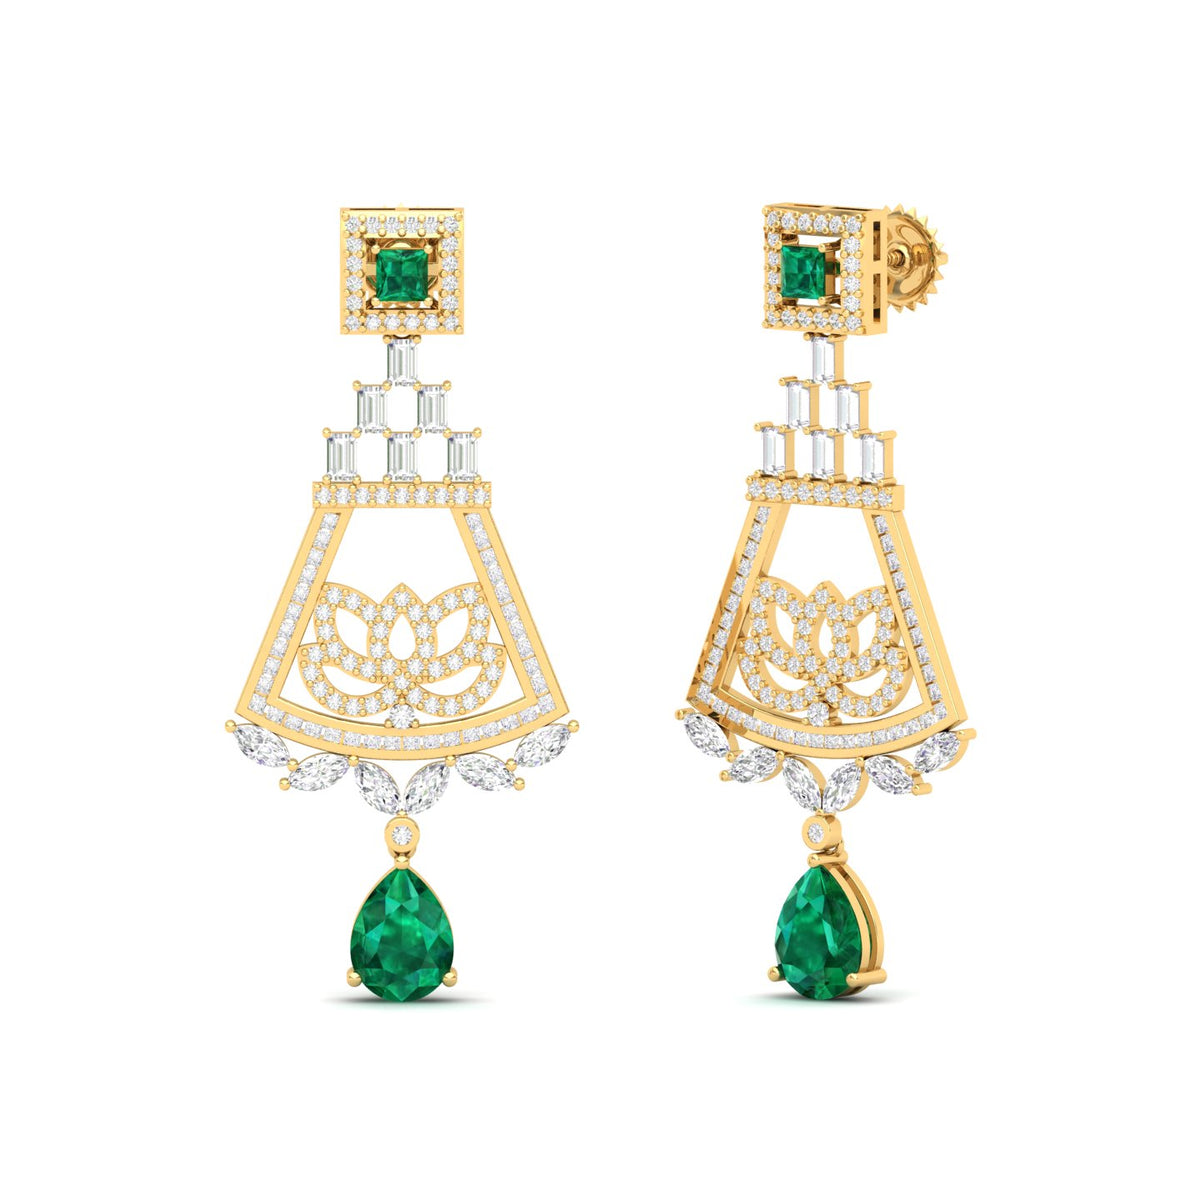 Maurya Trug Drop Earrings with Emeralds and Fancy Cut Diamonds